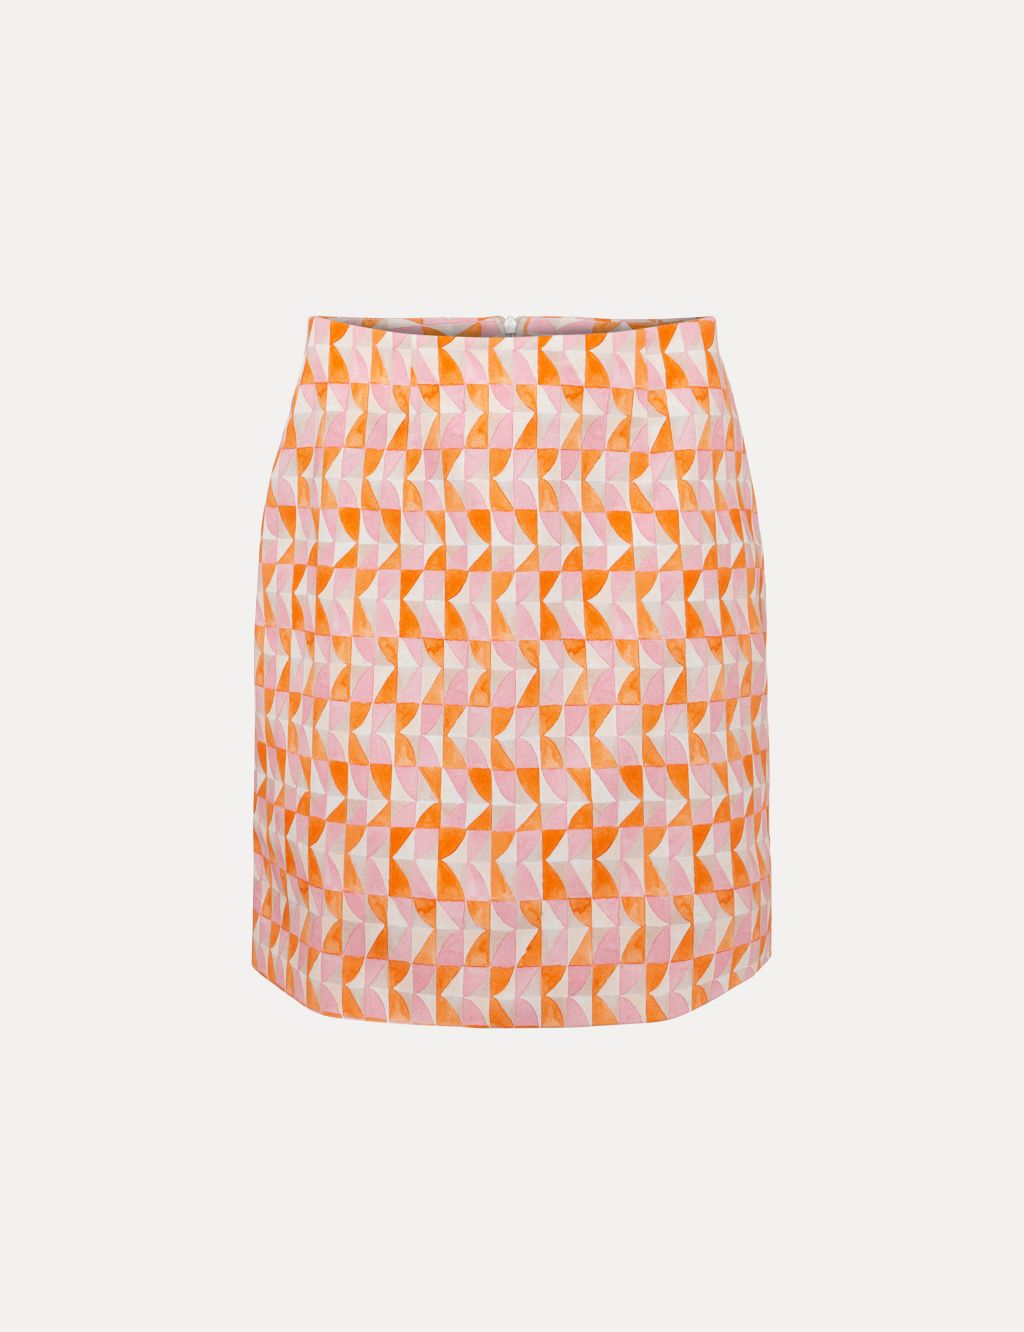 Cotton Rich Geometric Mini Pencil Skirt image 2